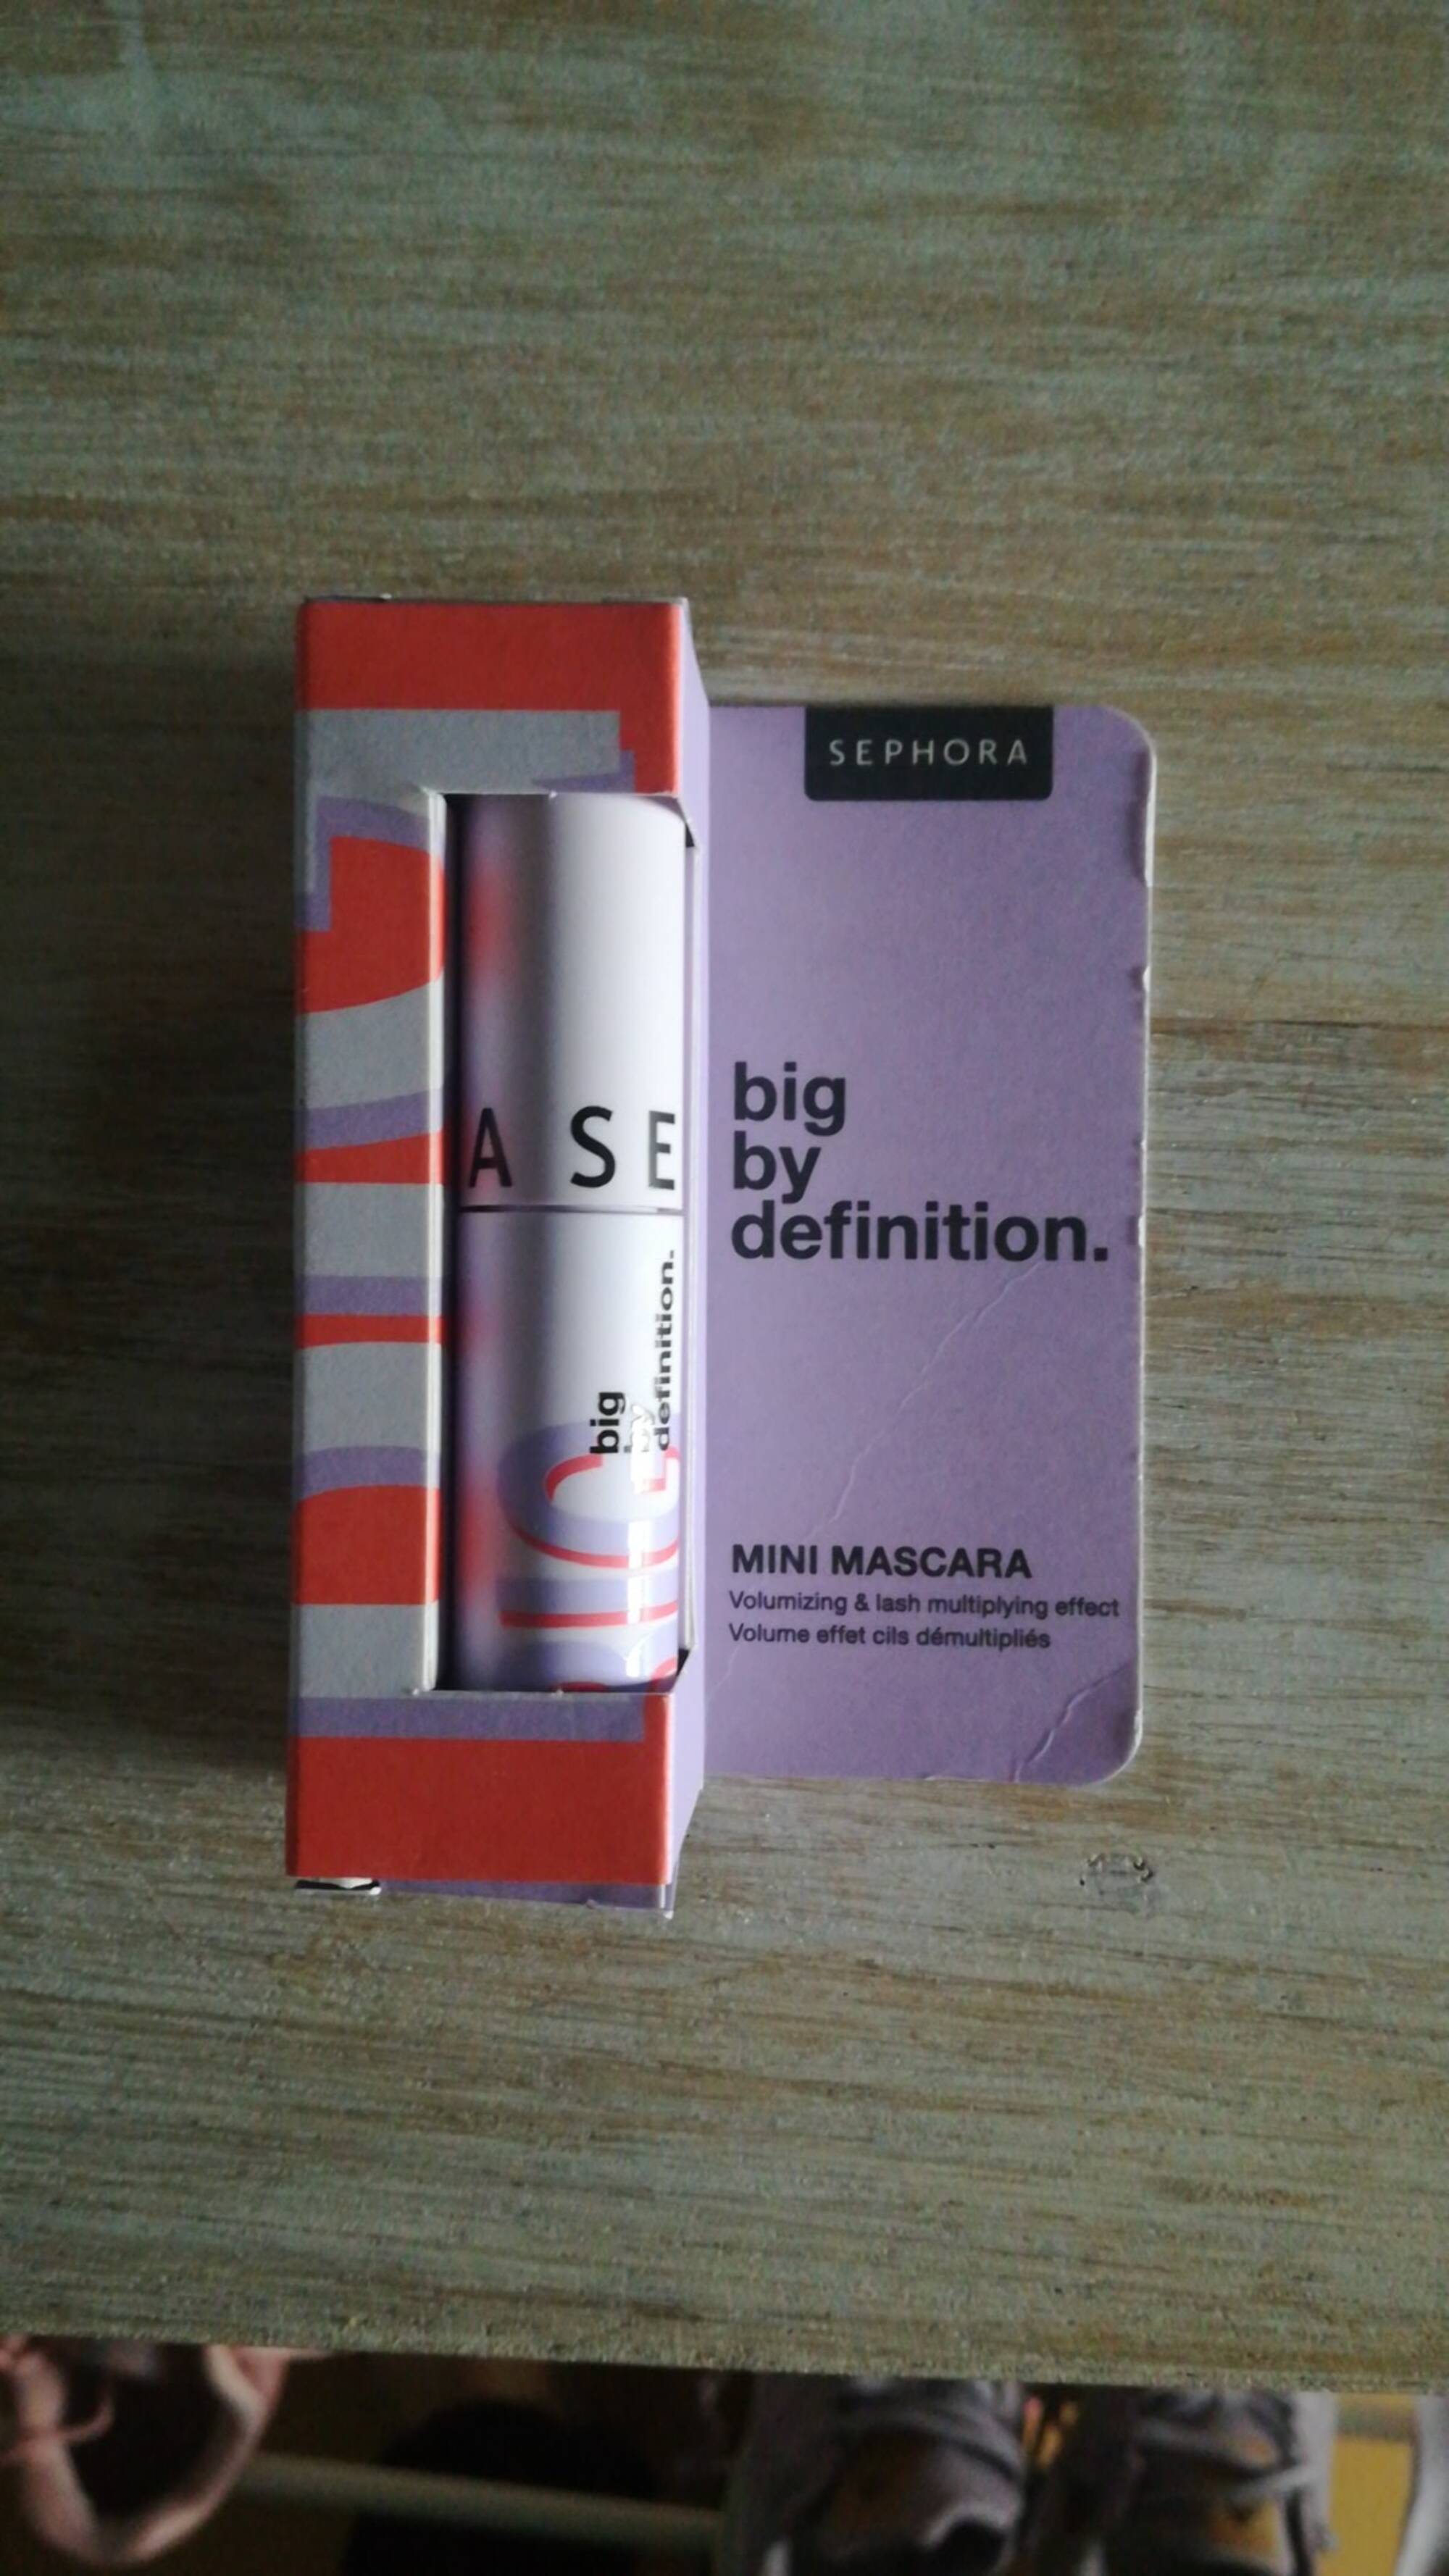 SEPHORA - Big by definition - Mini mascara